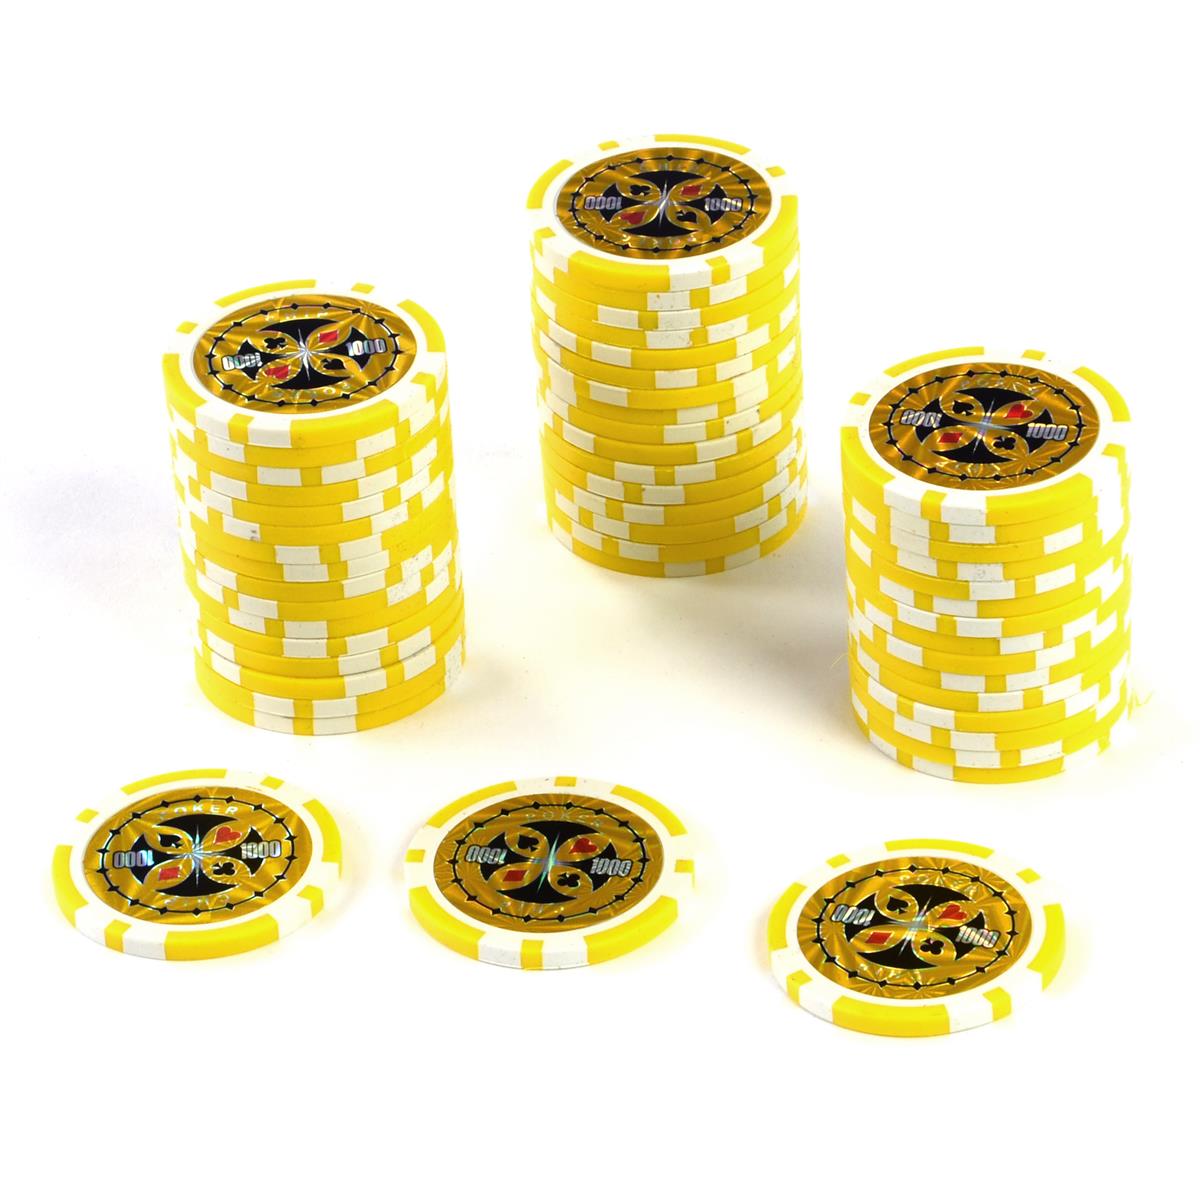 50 Poker-Chips Wert 1000 Laserchip 12g Metallkern ergänzend zum Pokerkoffer